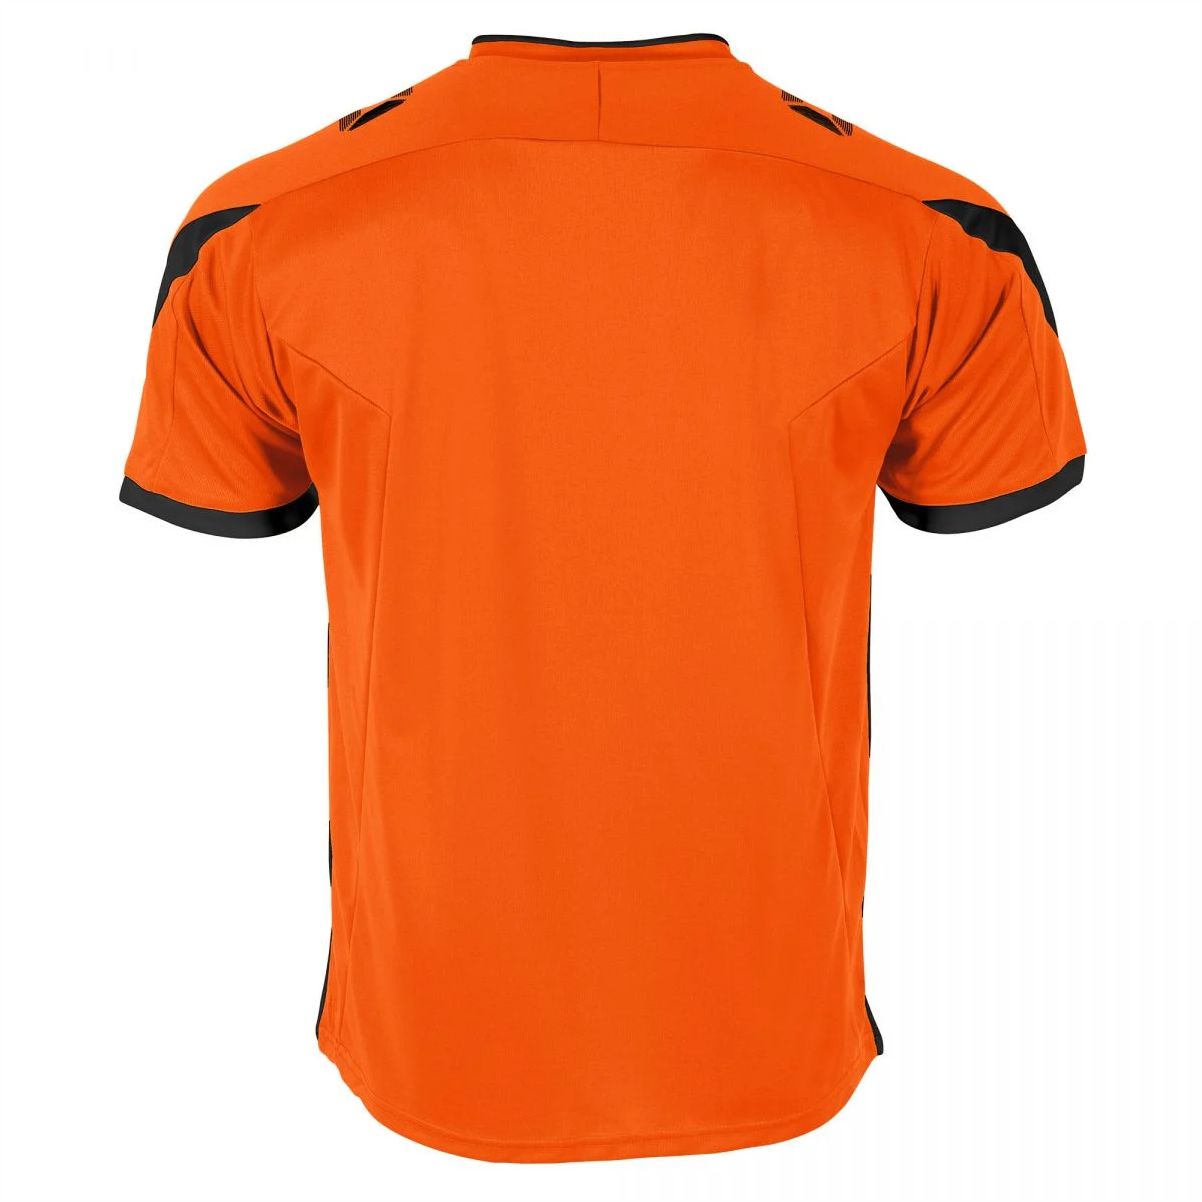 Stanno - Drive Shirt - Orange & Black